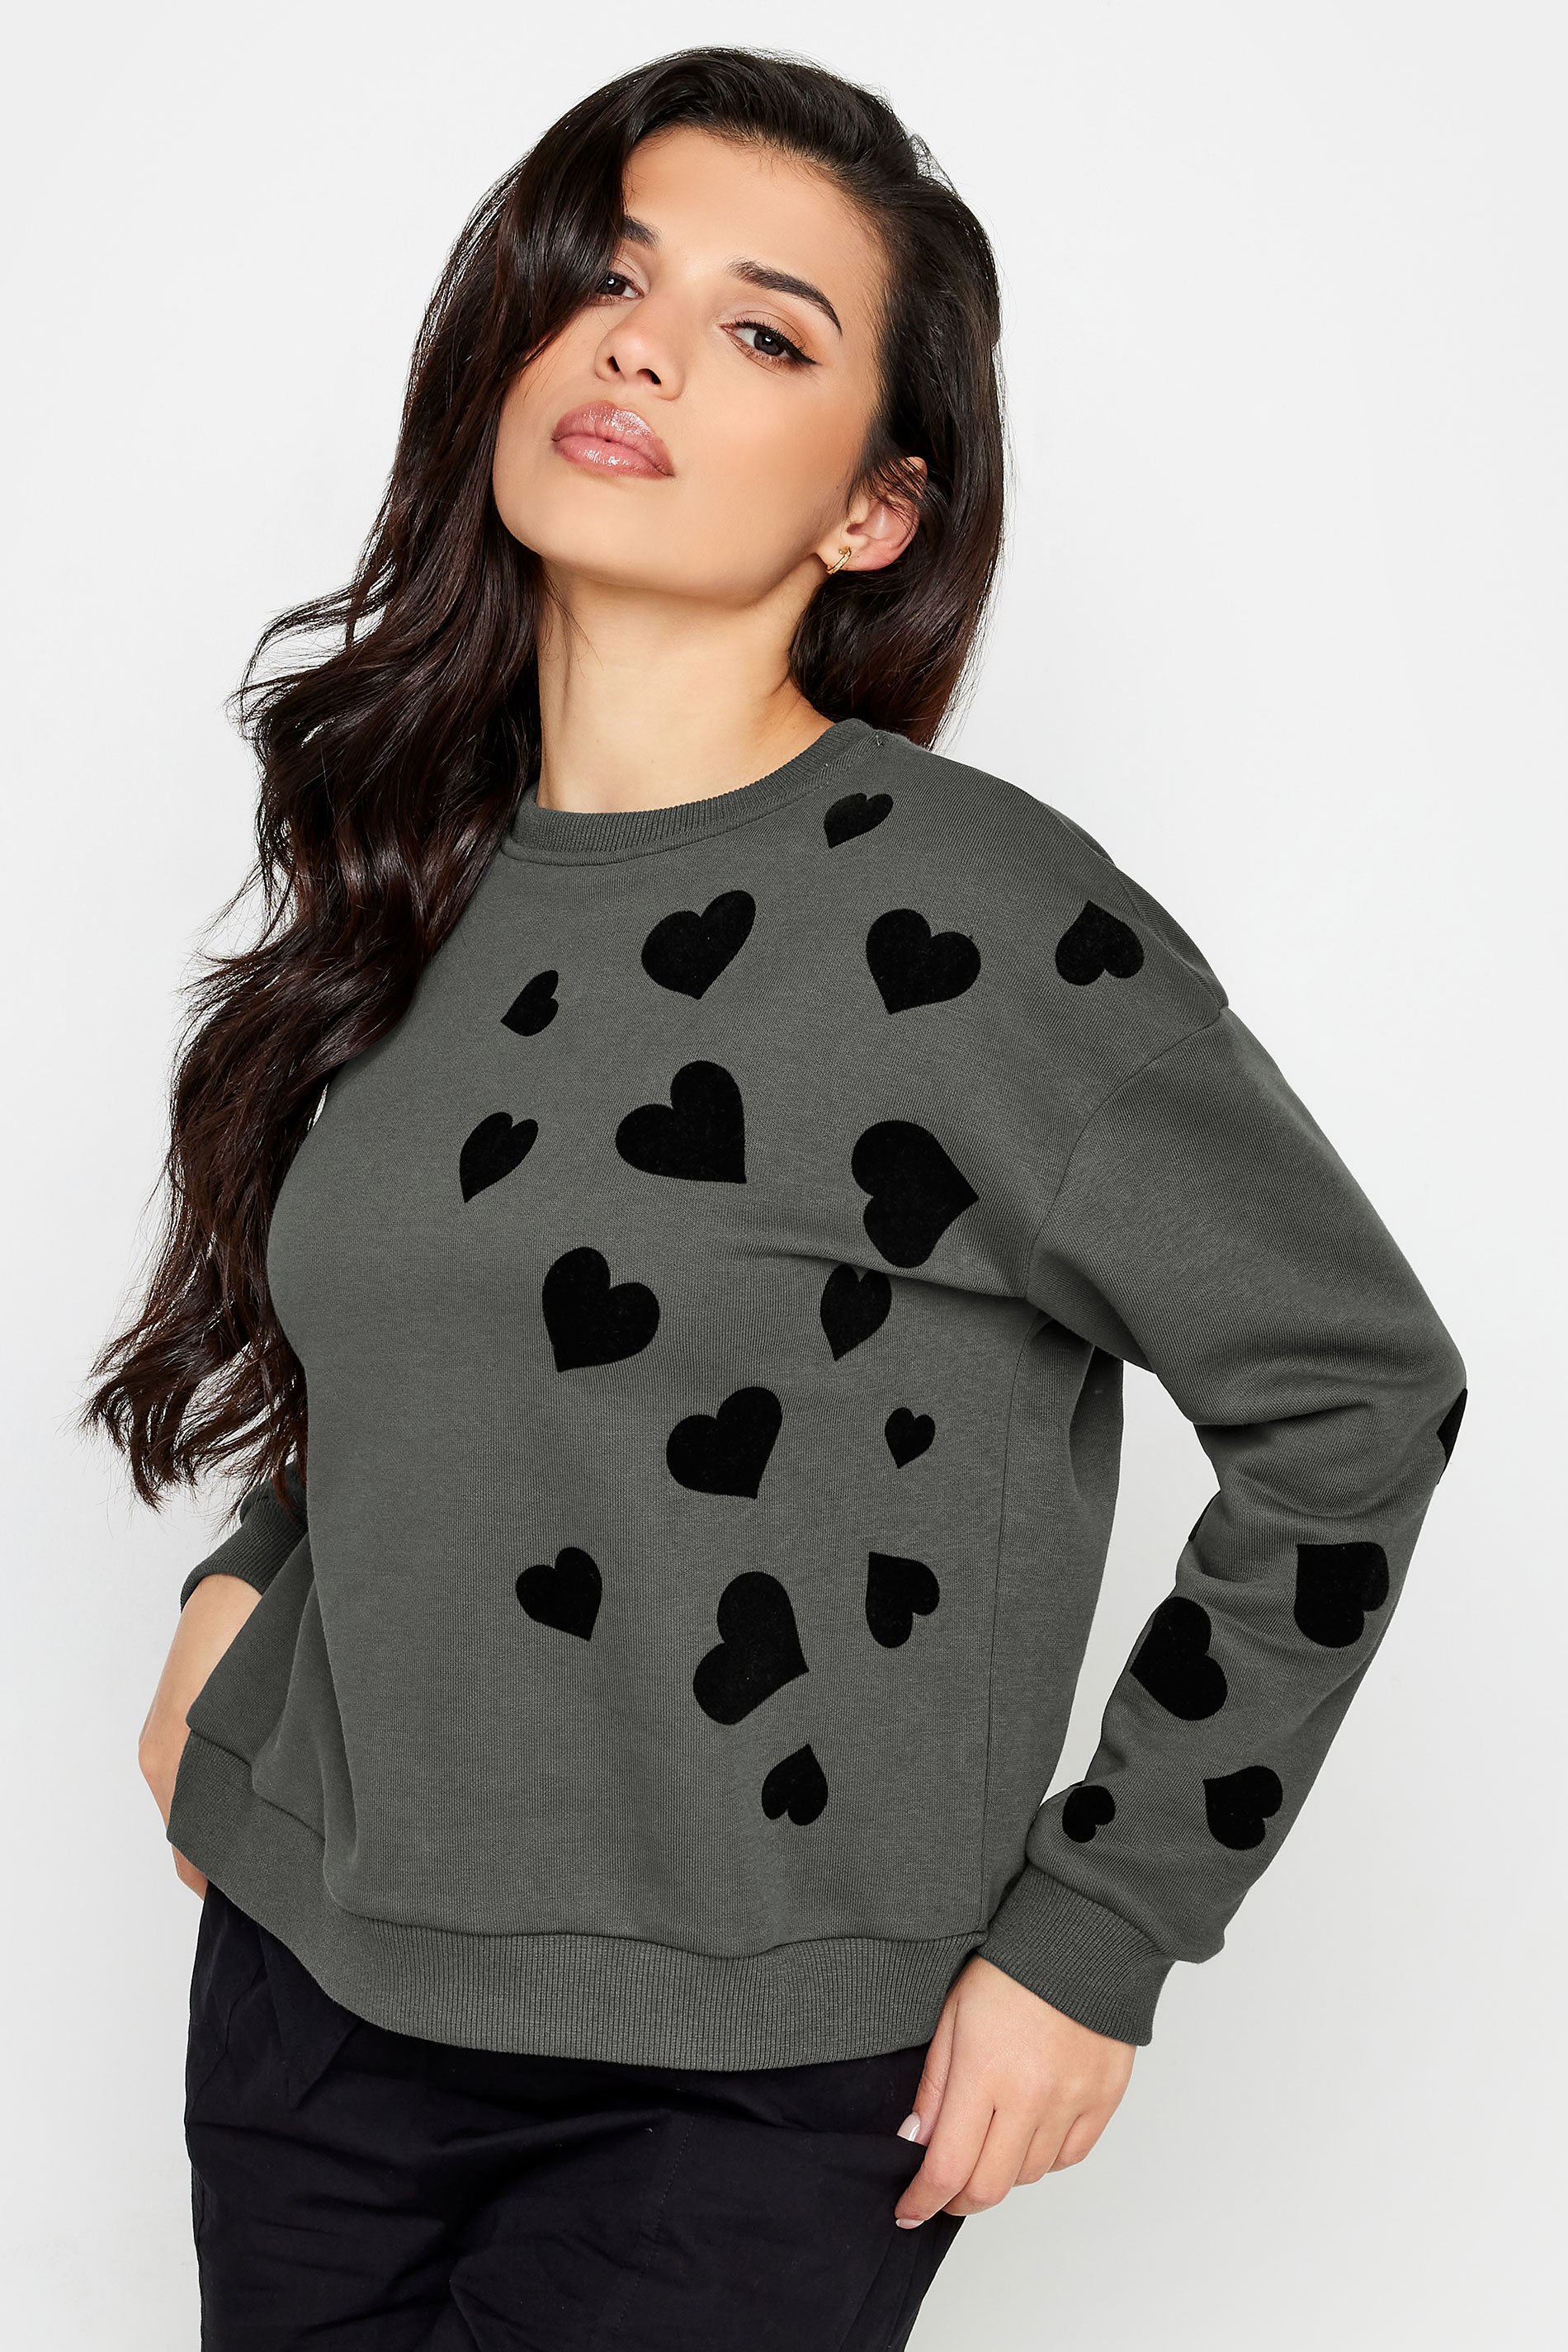 PixieGirl Charcoal Grey Heart Print Sweatshirt | PixieGirl  1